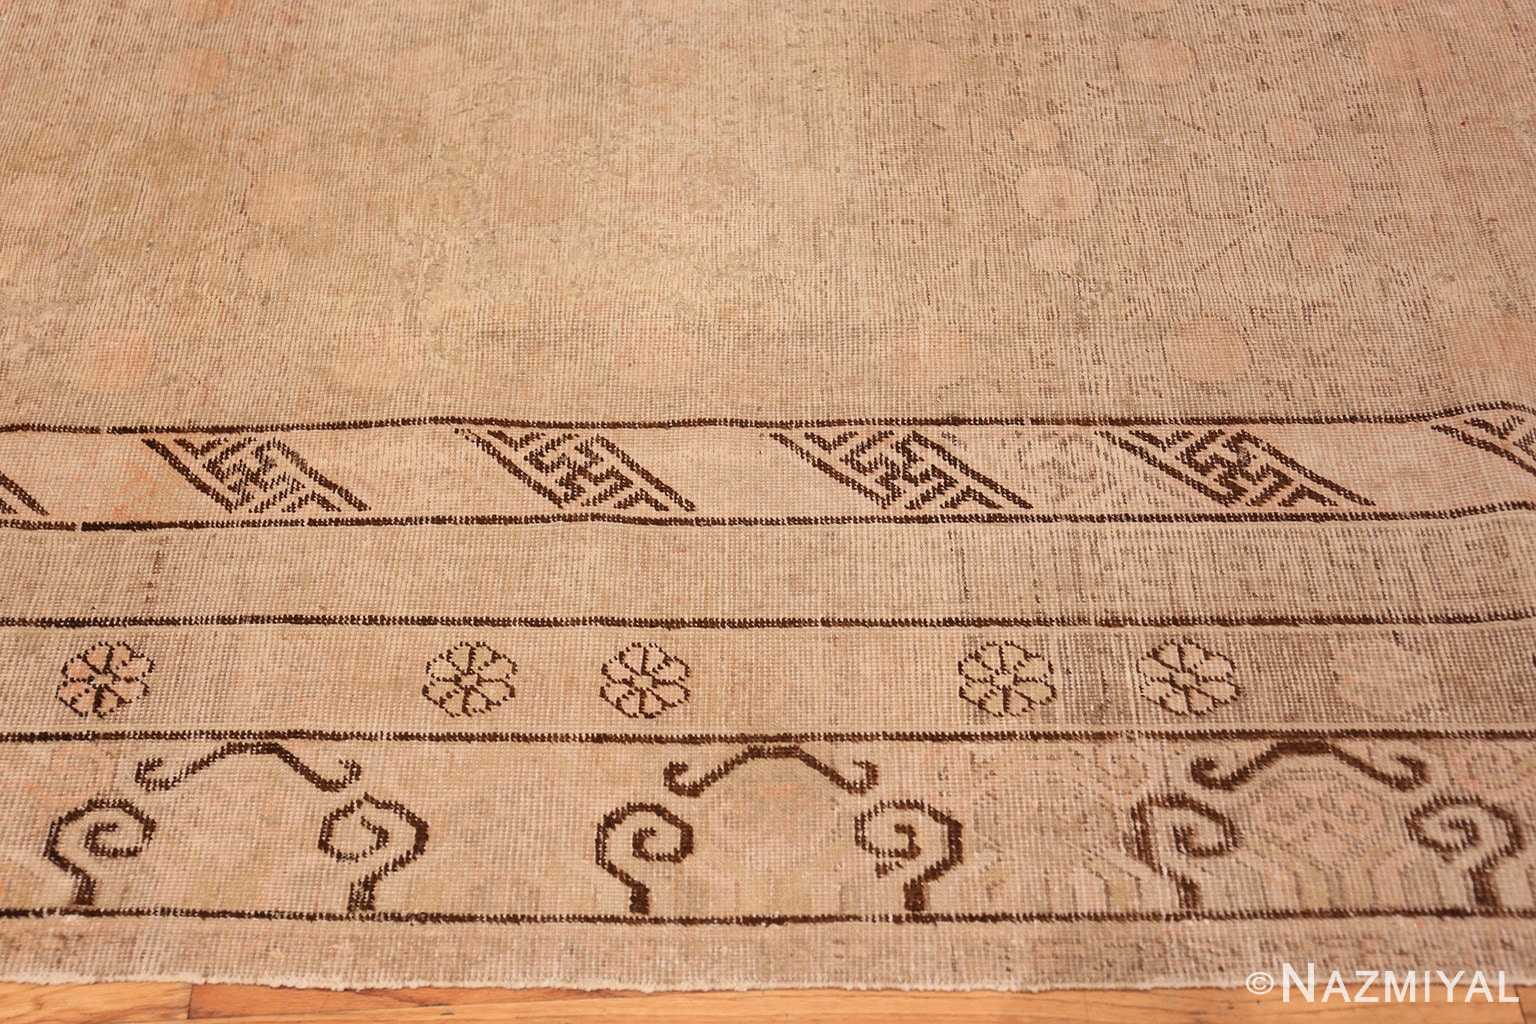 Border Decorative Antique Khotan rug 44995 by Nazmiyal